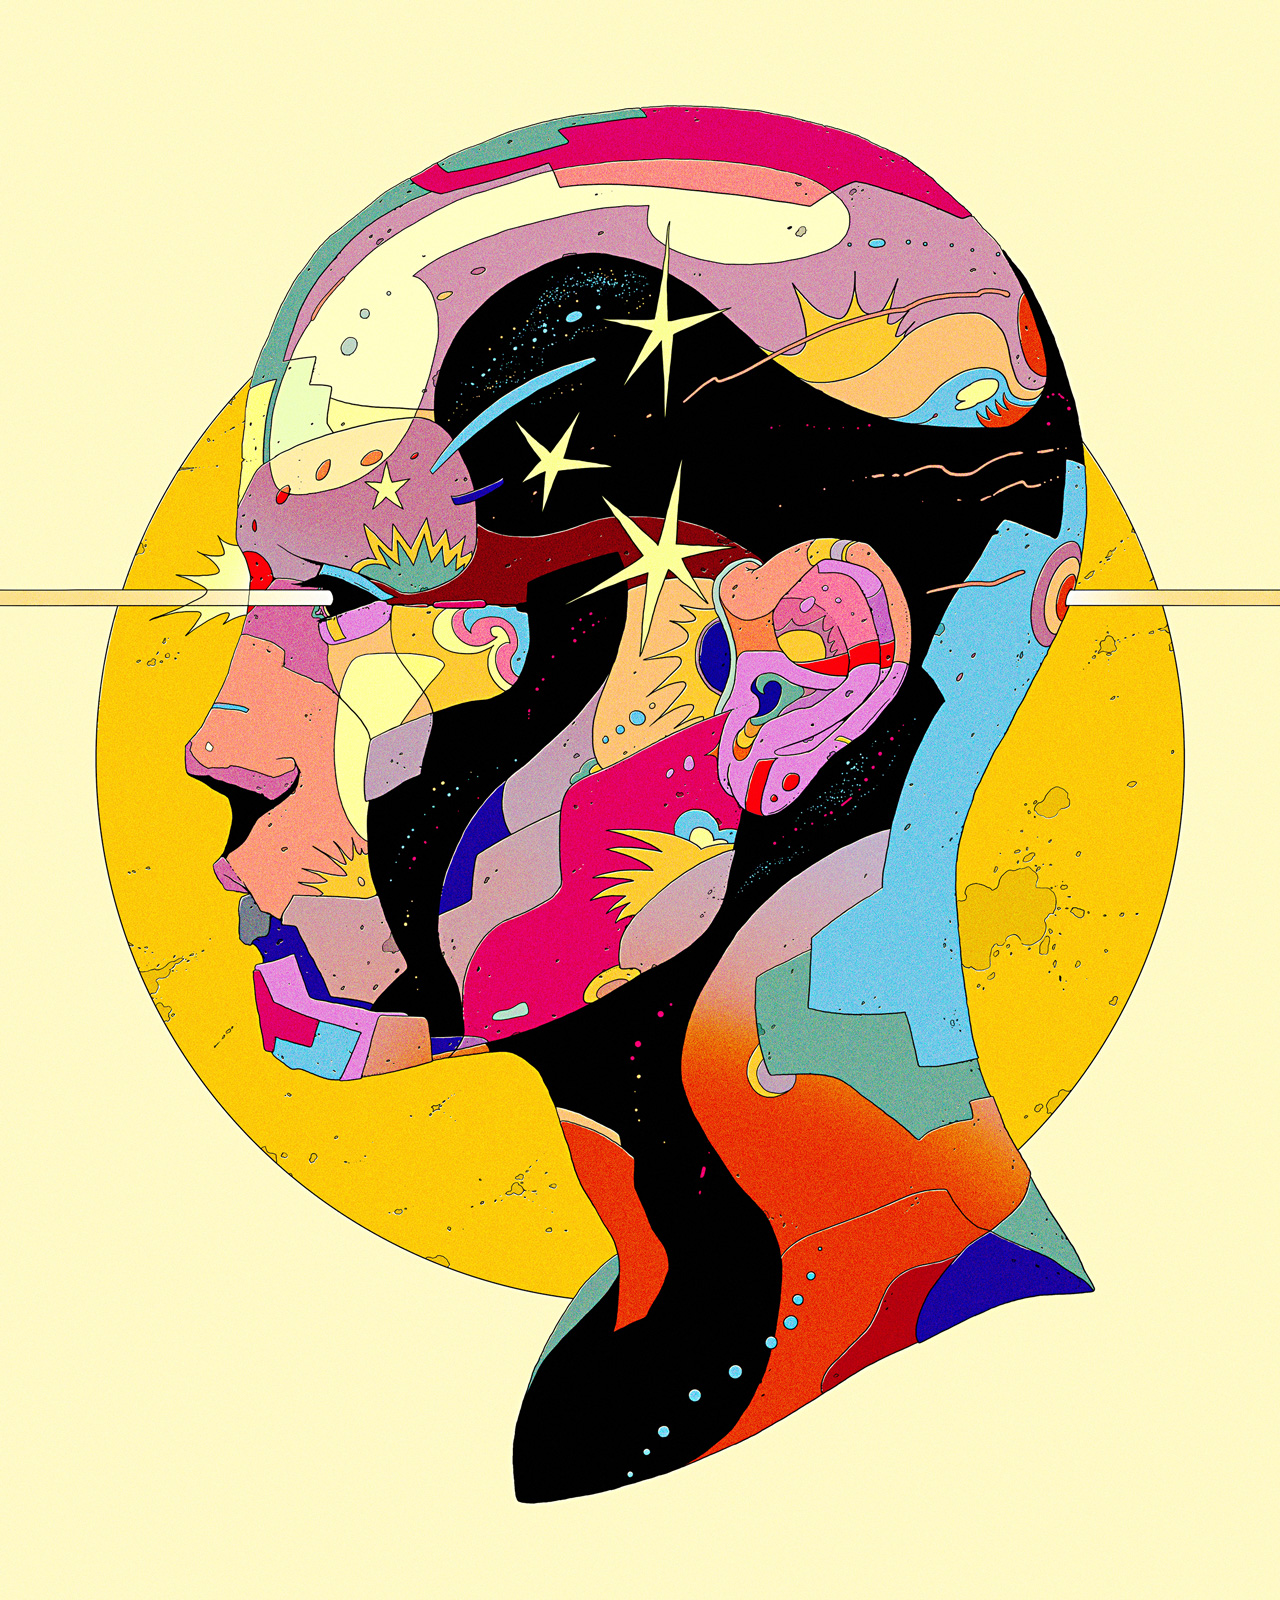 Maciek Wolanski Abstract Bald Looking Sideways Face Colorful Digital Art Illustration Portrait Displ 1280x1600